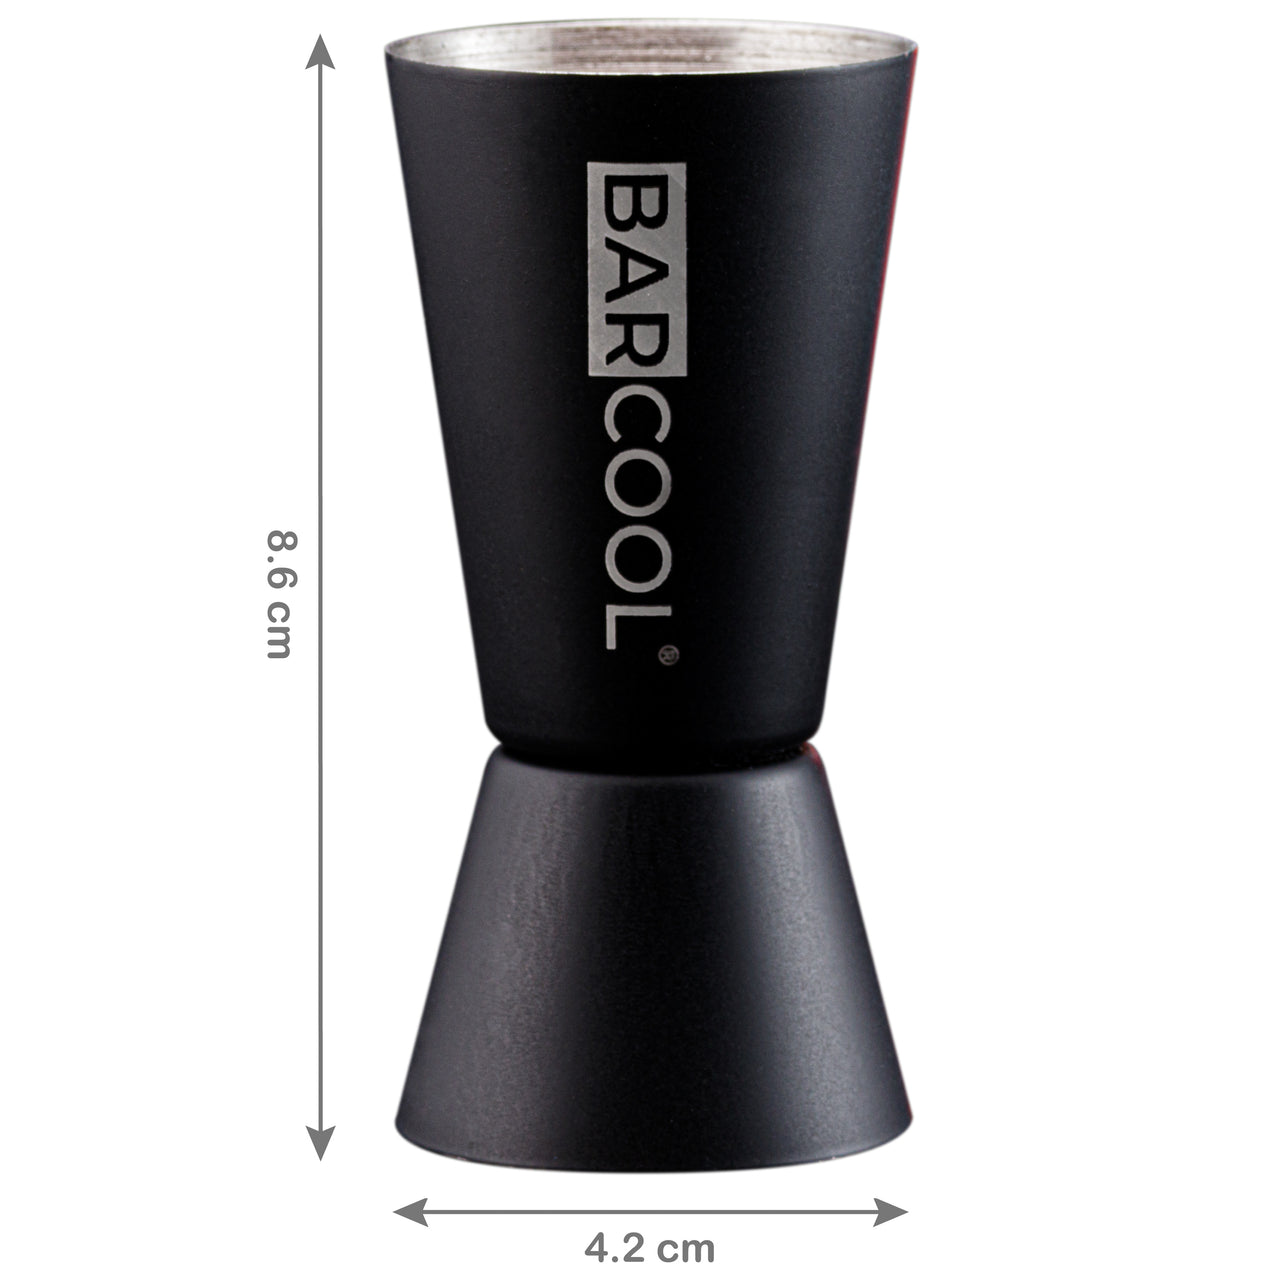 Barcool Cocktail Jigger 50ml / 25ml